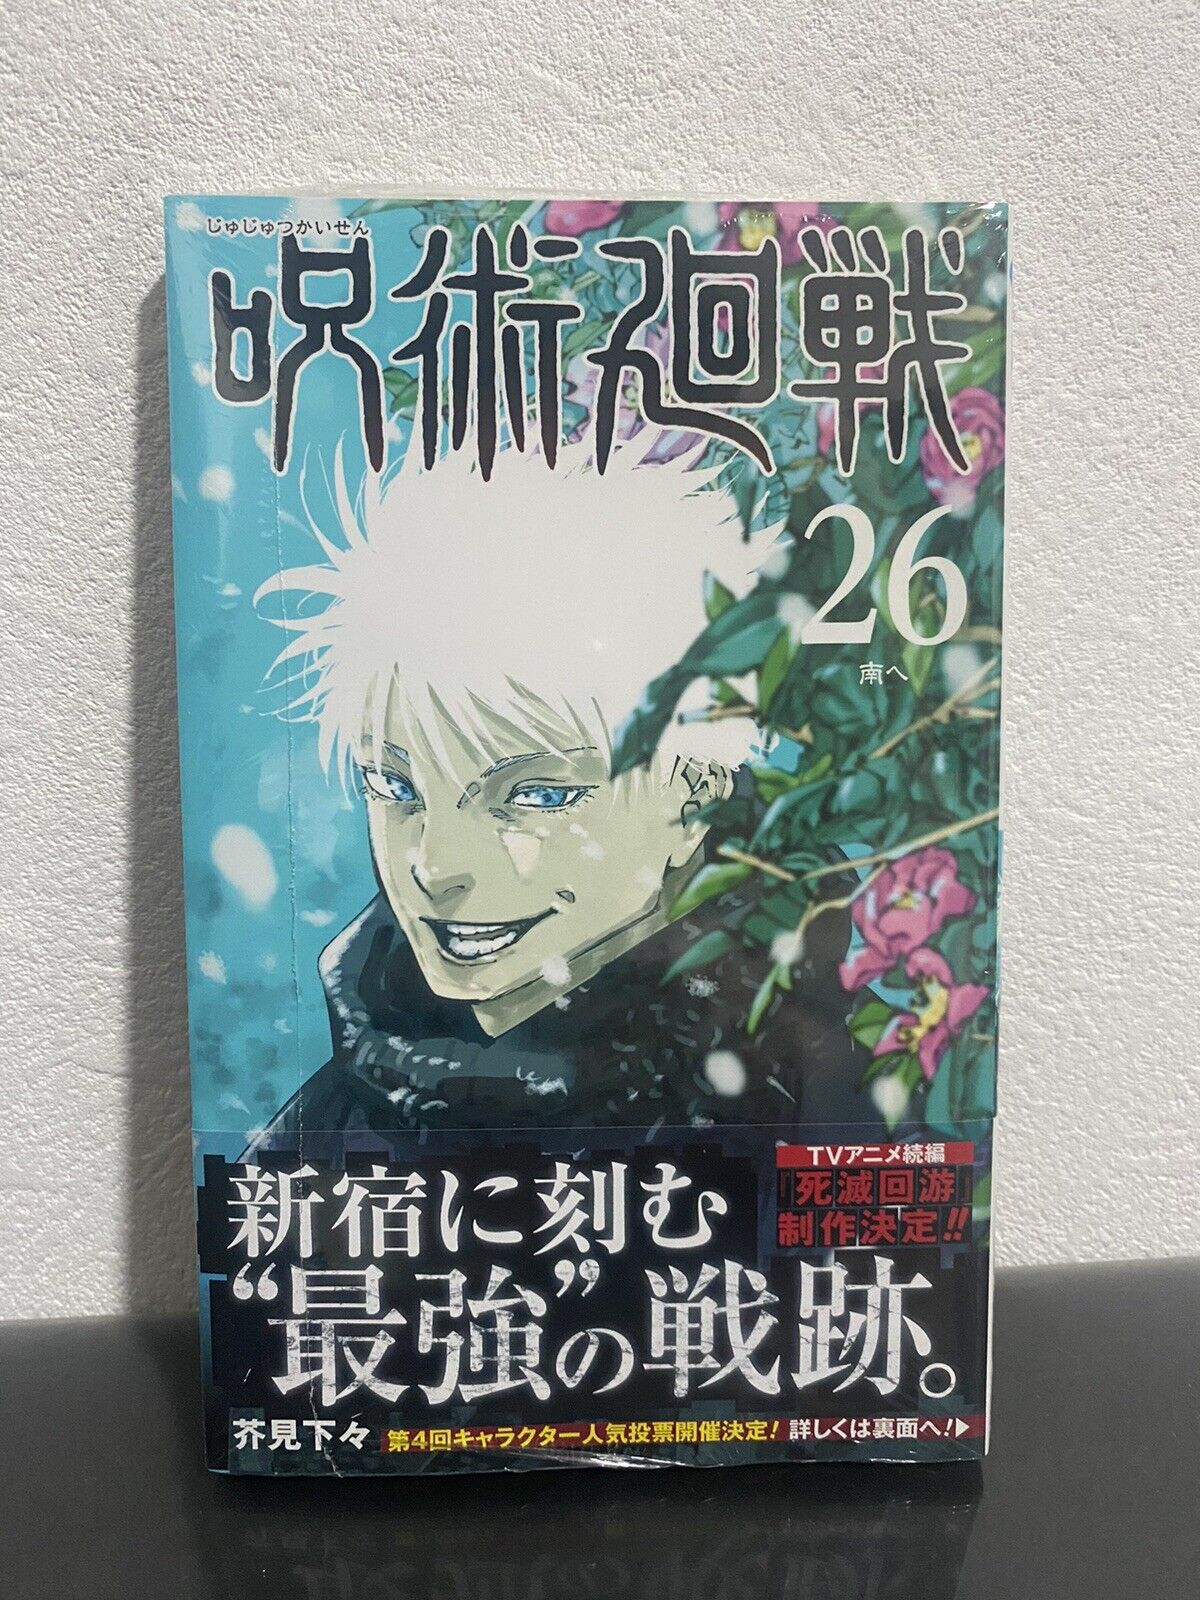 Jujutsu Kaisen Volume 26 Vol.26 Newly Issue JUMP Comic Manga Japanese Japan NEW